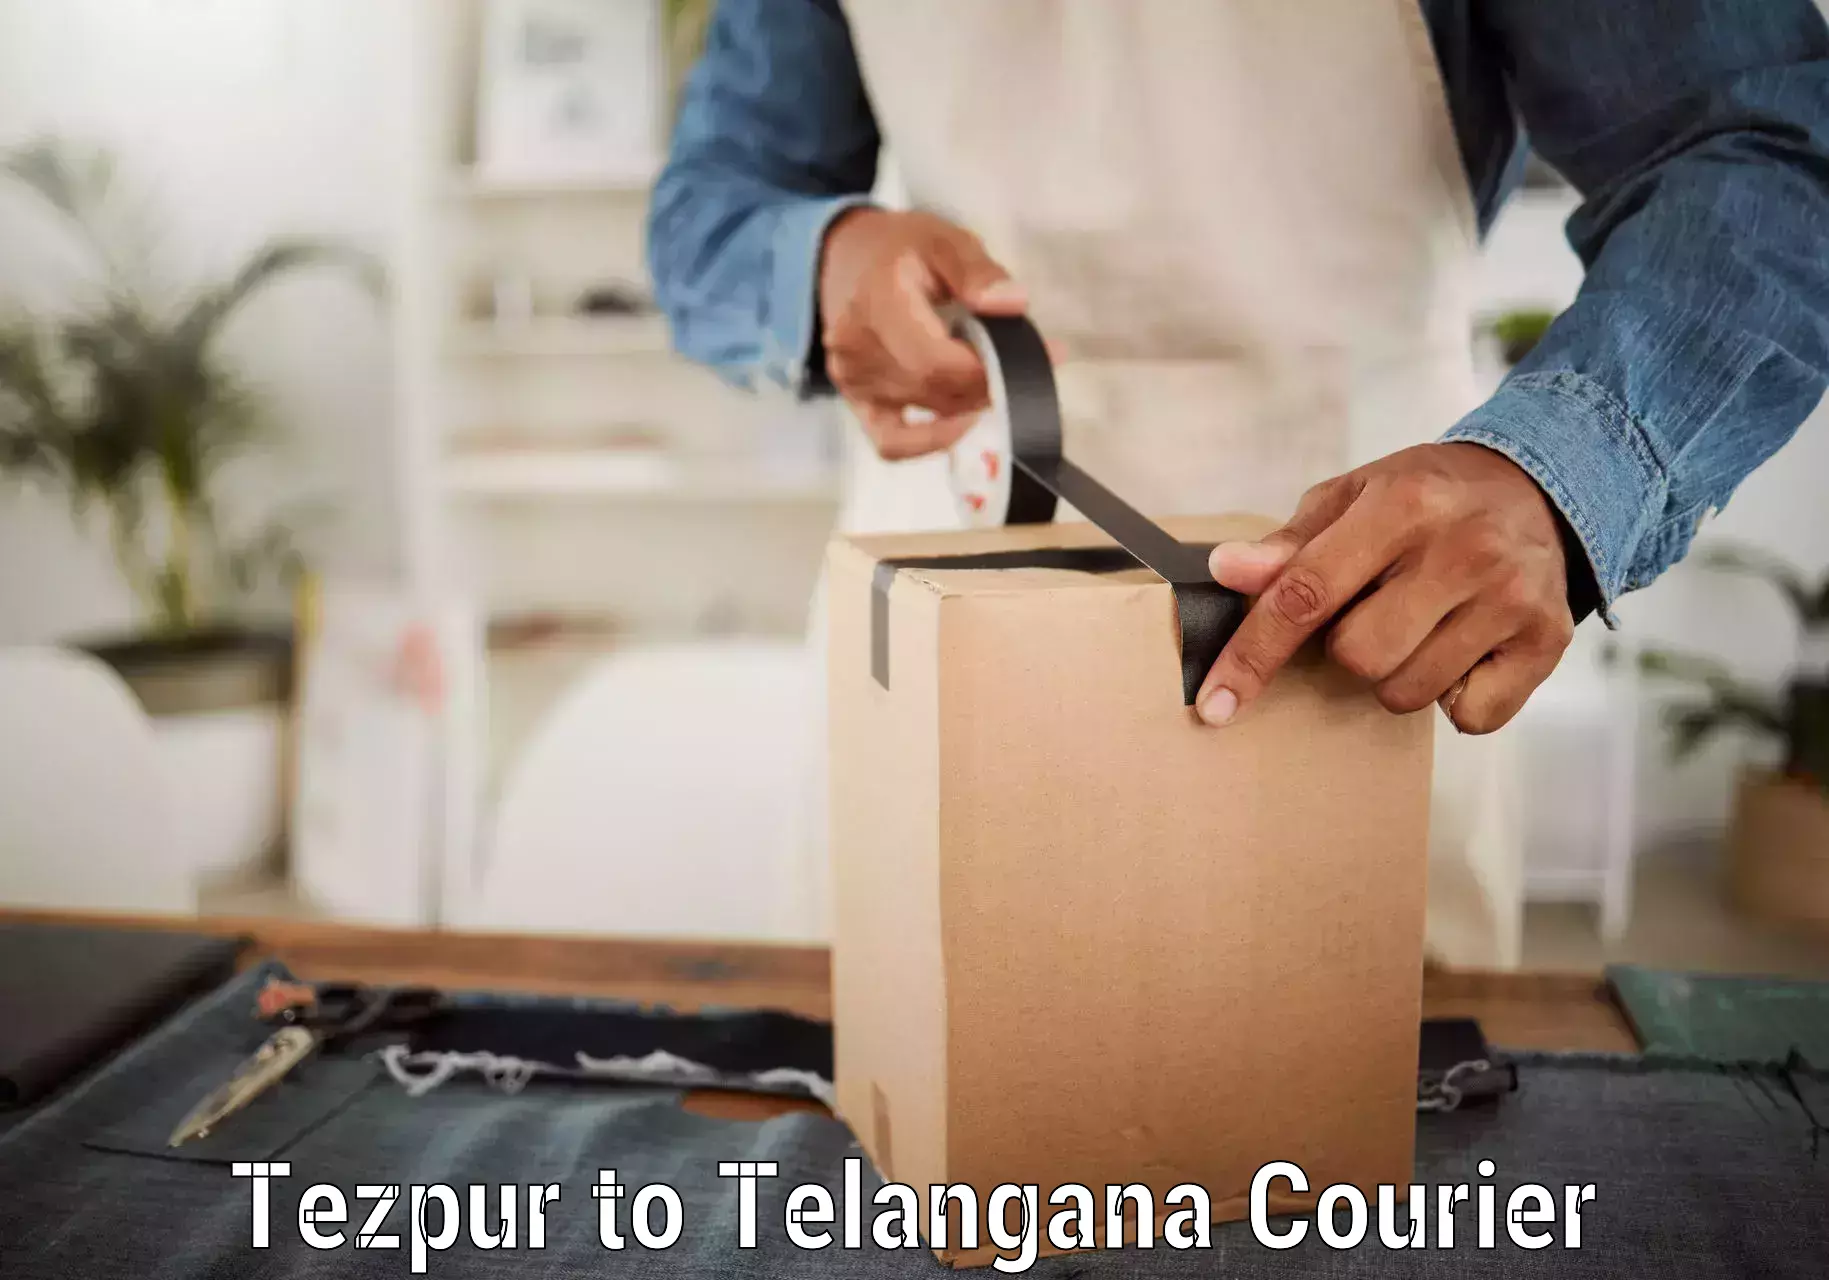 User-friendly courier app Tezpur to Karimnagar